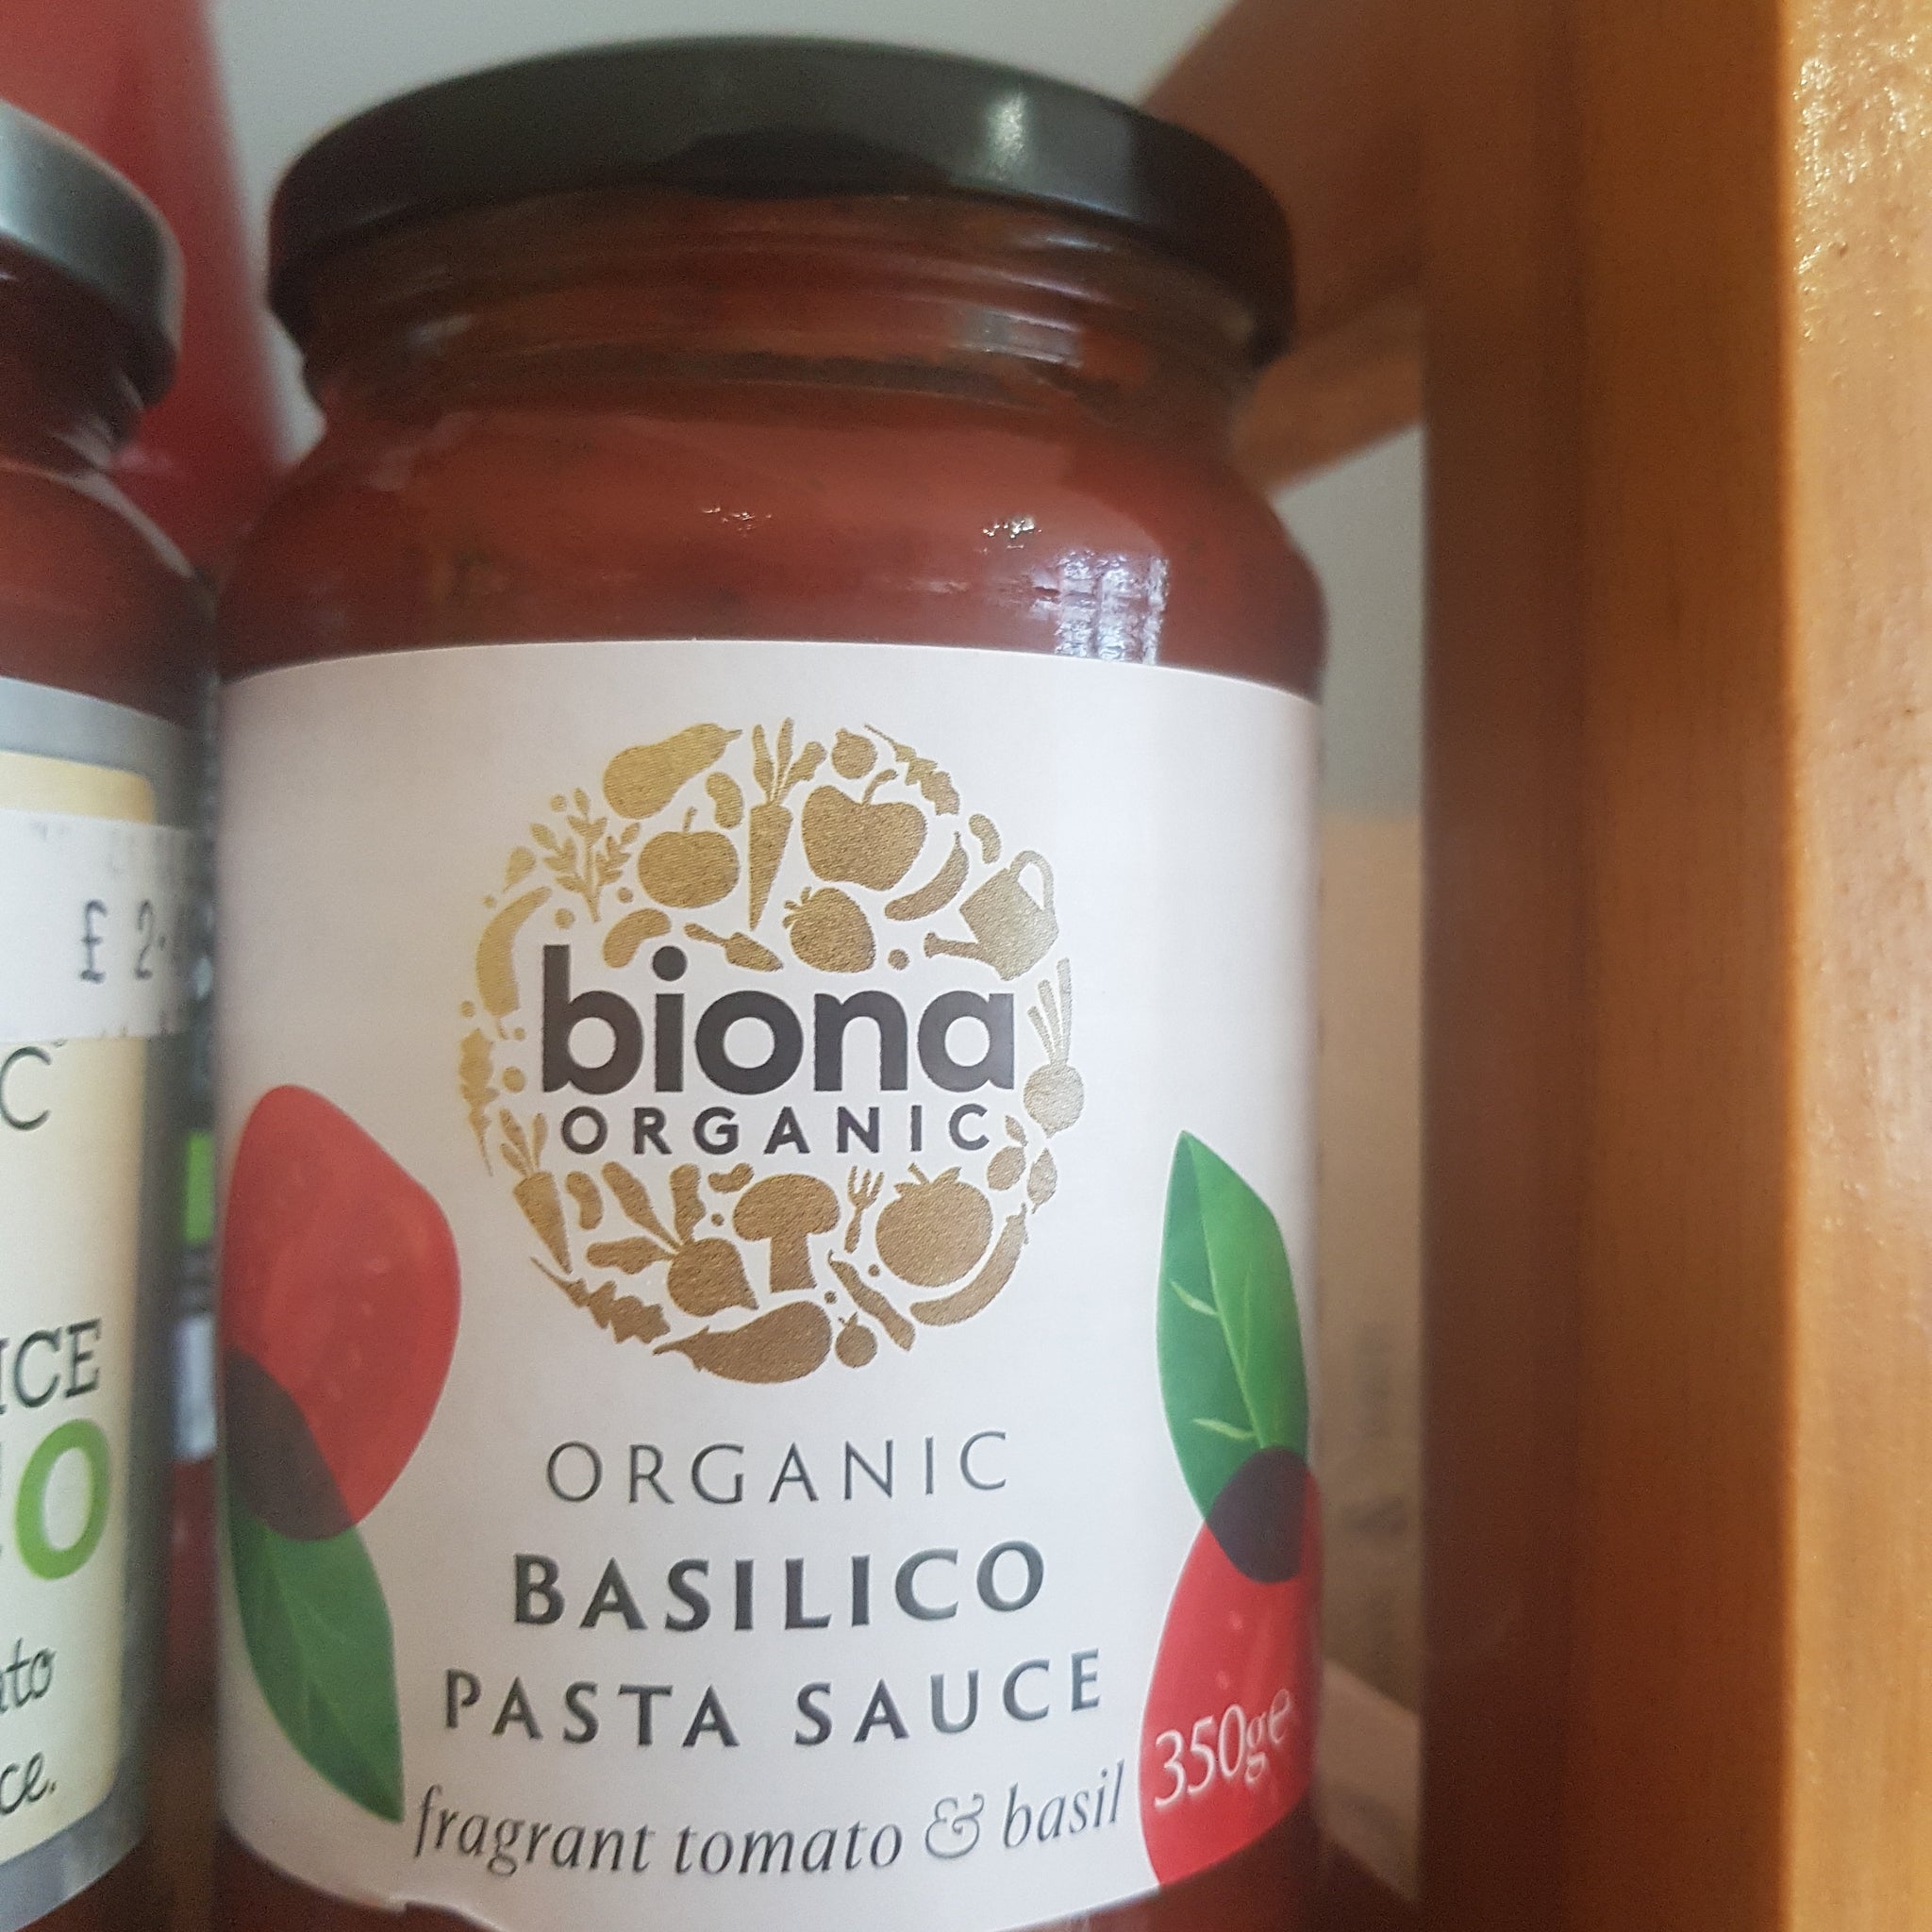 Biona organic basilica pasta sauce